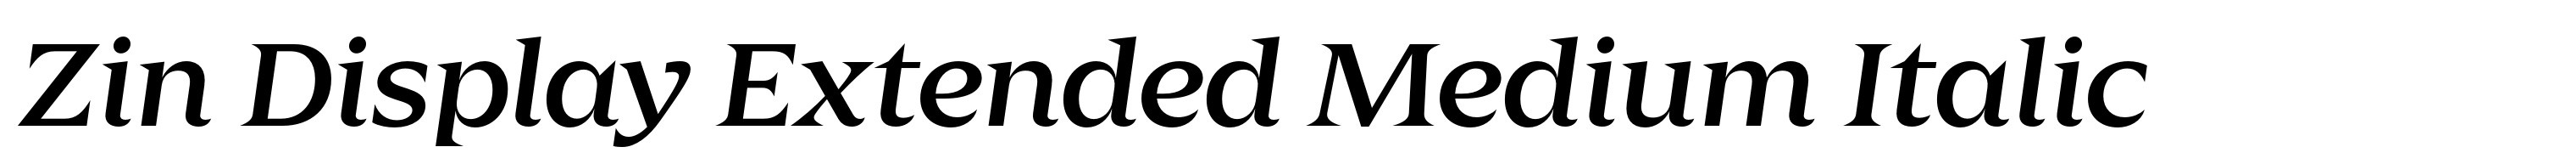 Zin Display Extended Medium Italic